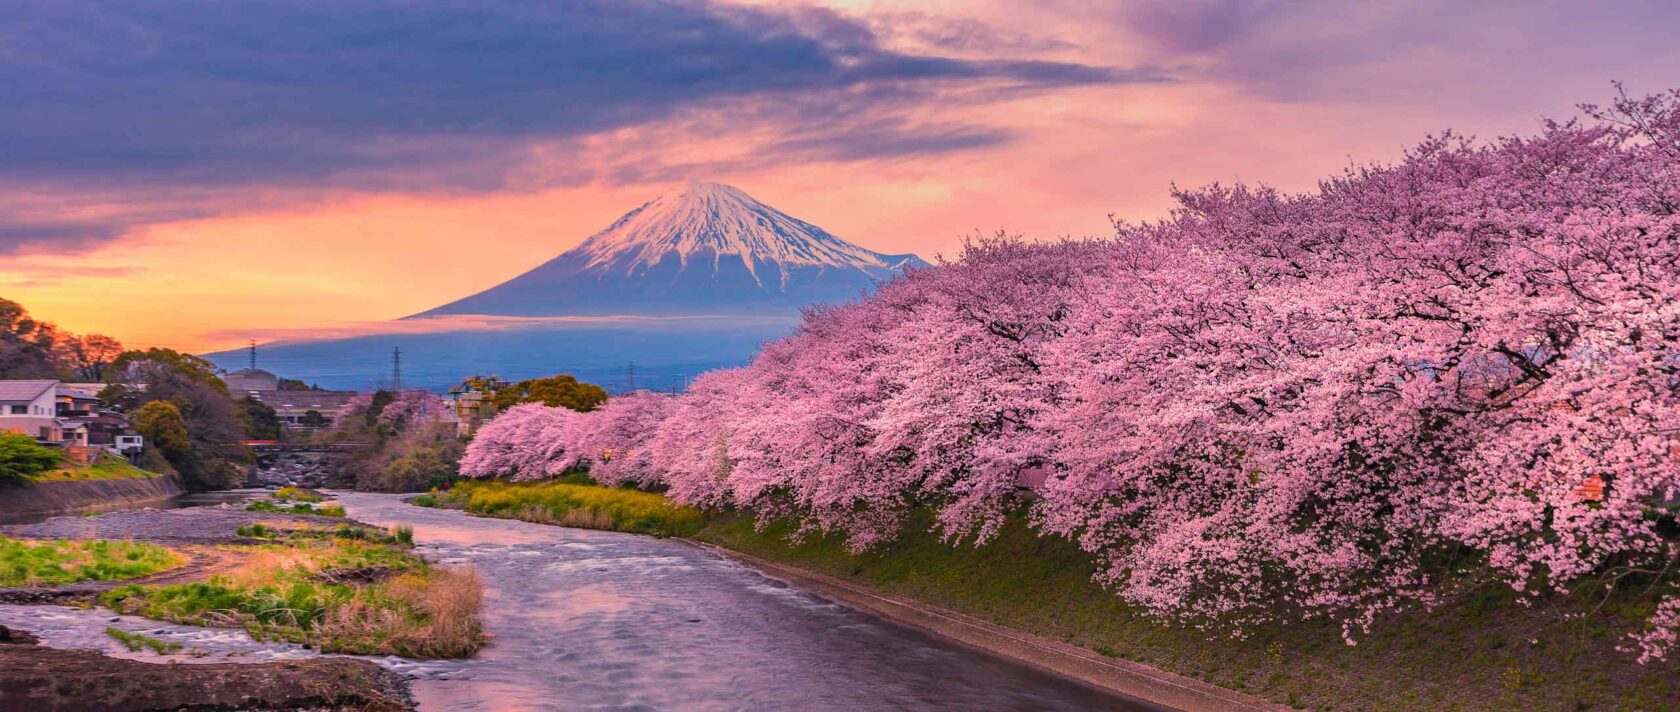 Cherry blossom trees by Mountain Fuji.